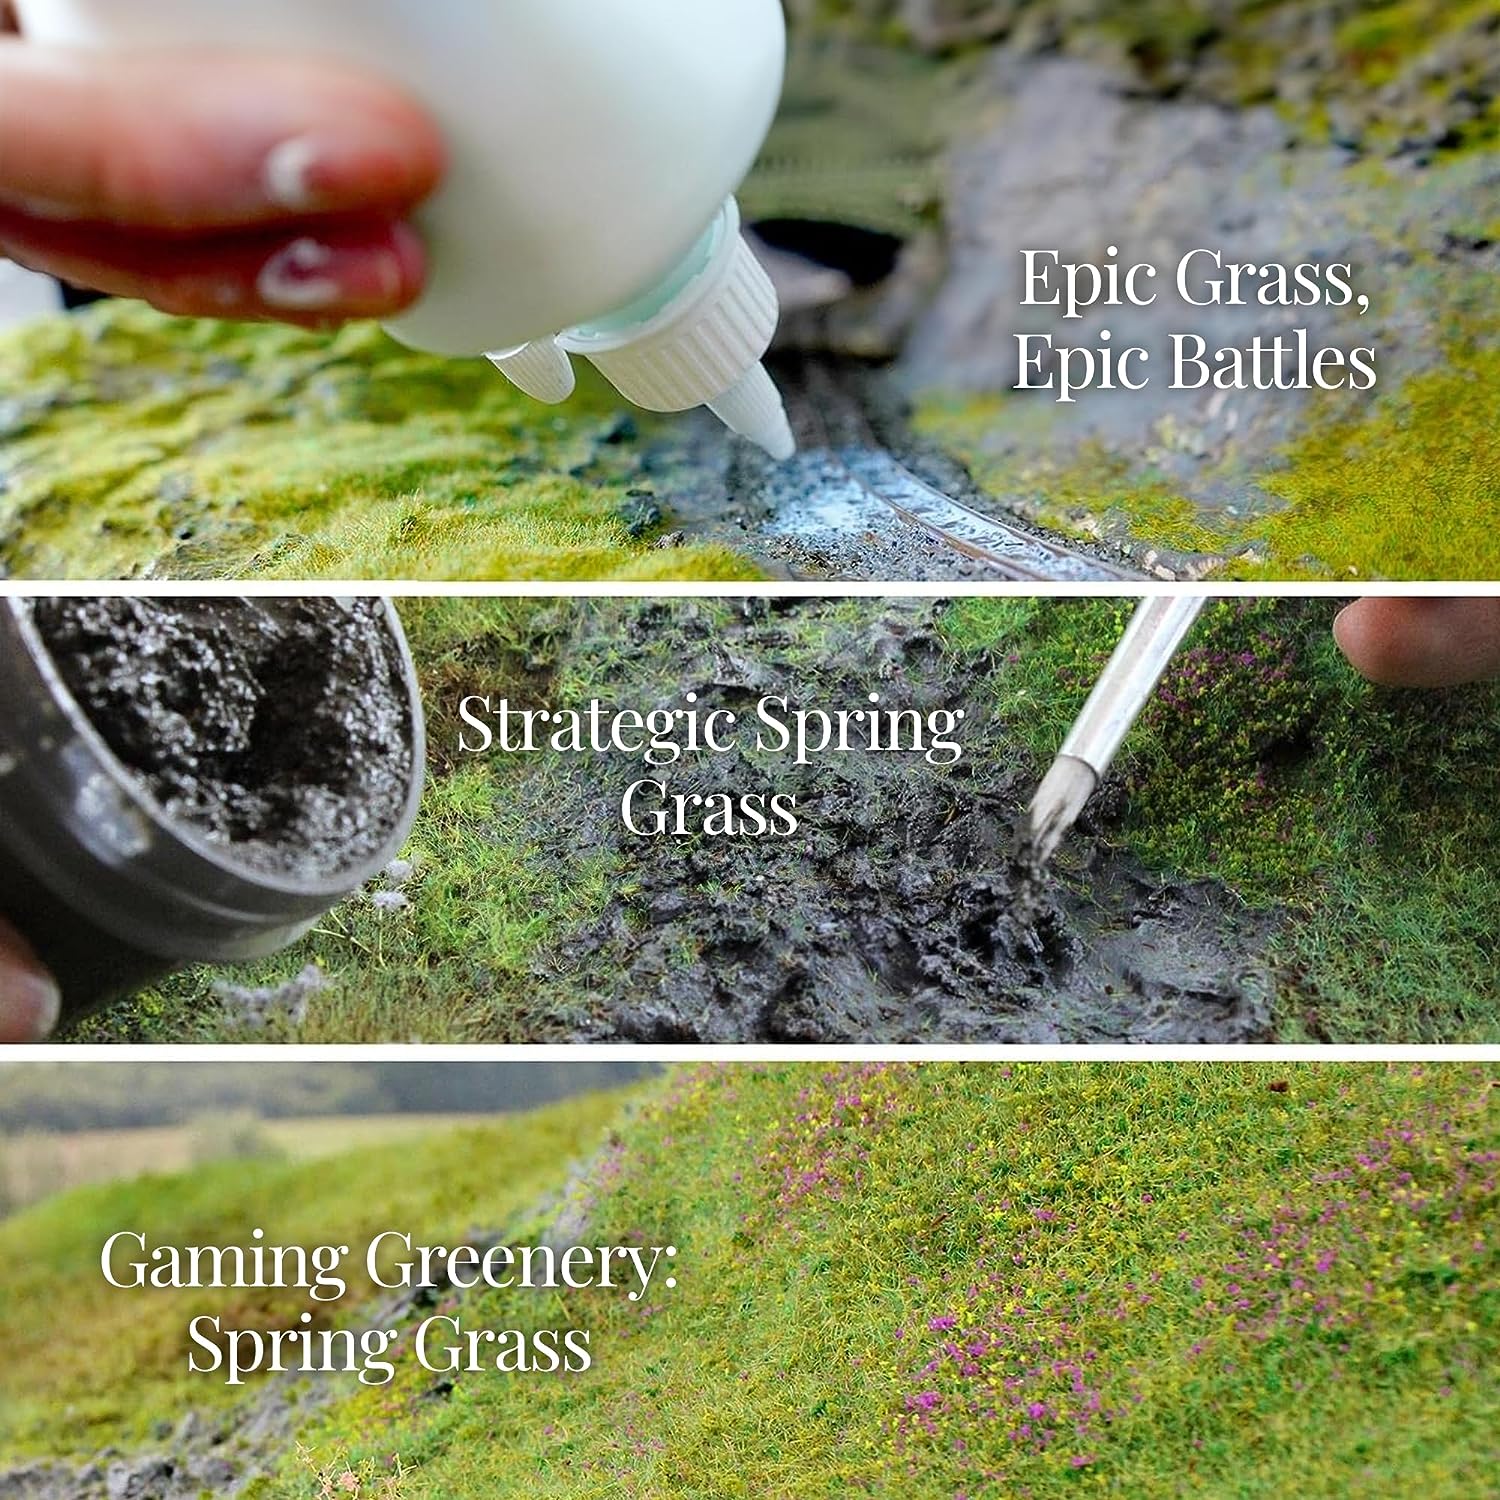 Warlord Games - Battlefields & Basing: Spring 2mm Static Grass (180ml)